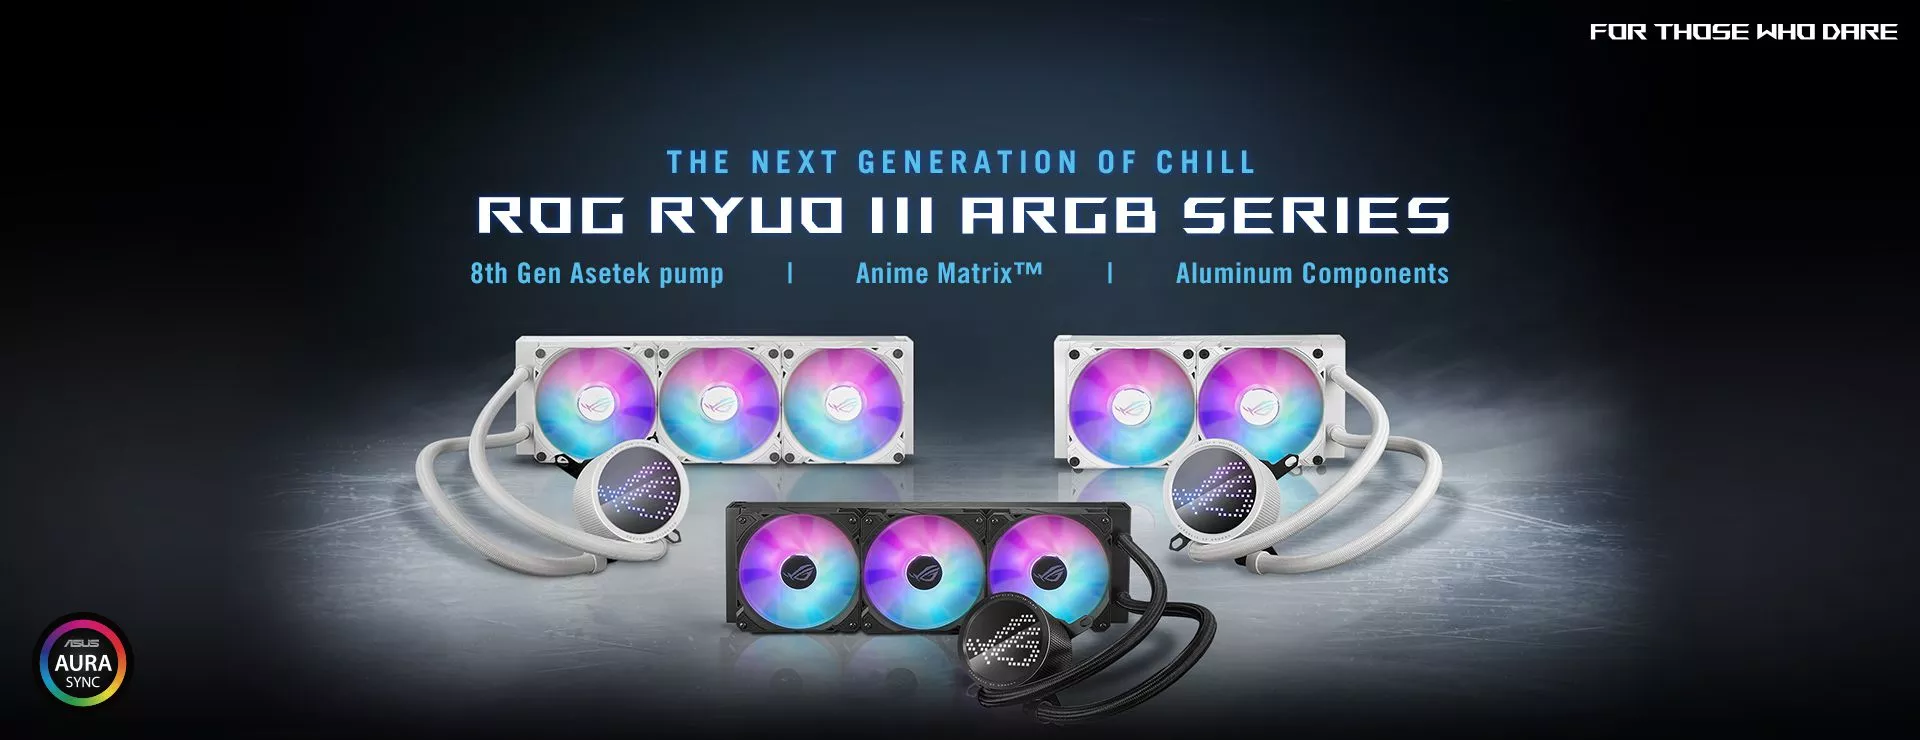 ROG RYUO III ARGB Series The Next Generation of Chill 8th Gen Asetek pump | Anime Matrix ™ | Aluminum Components